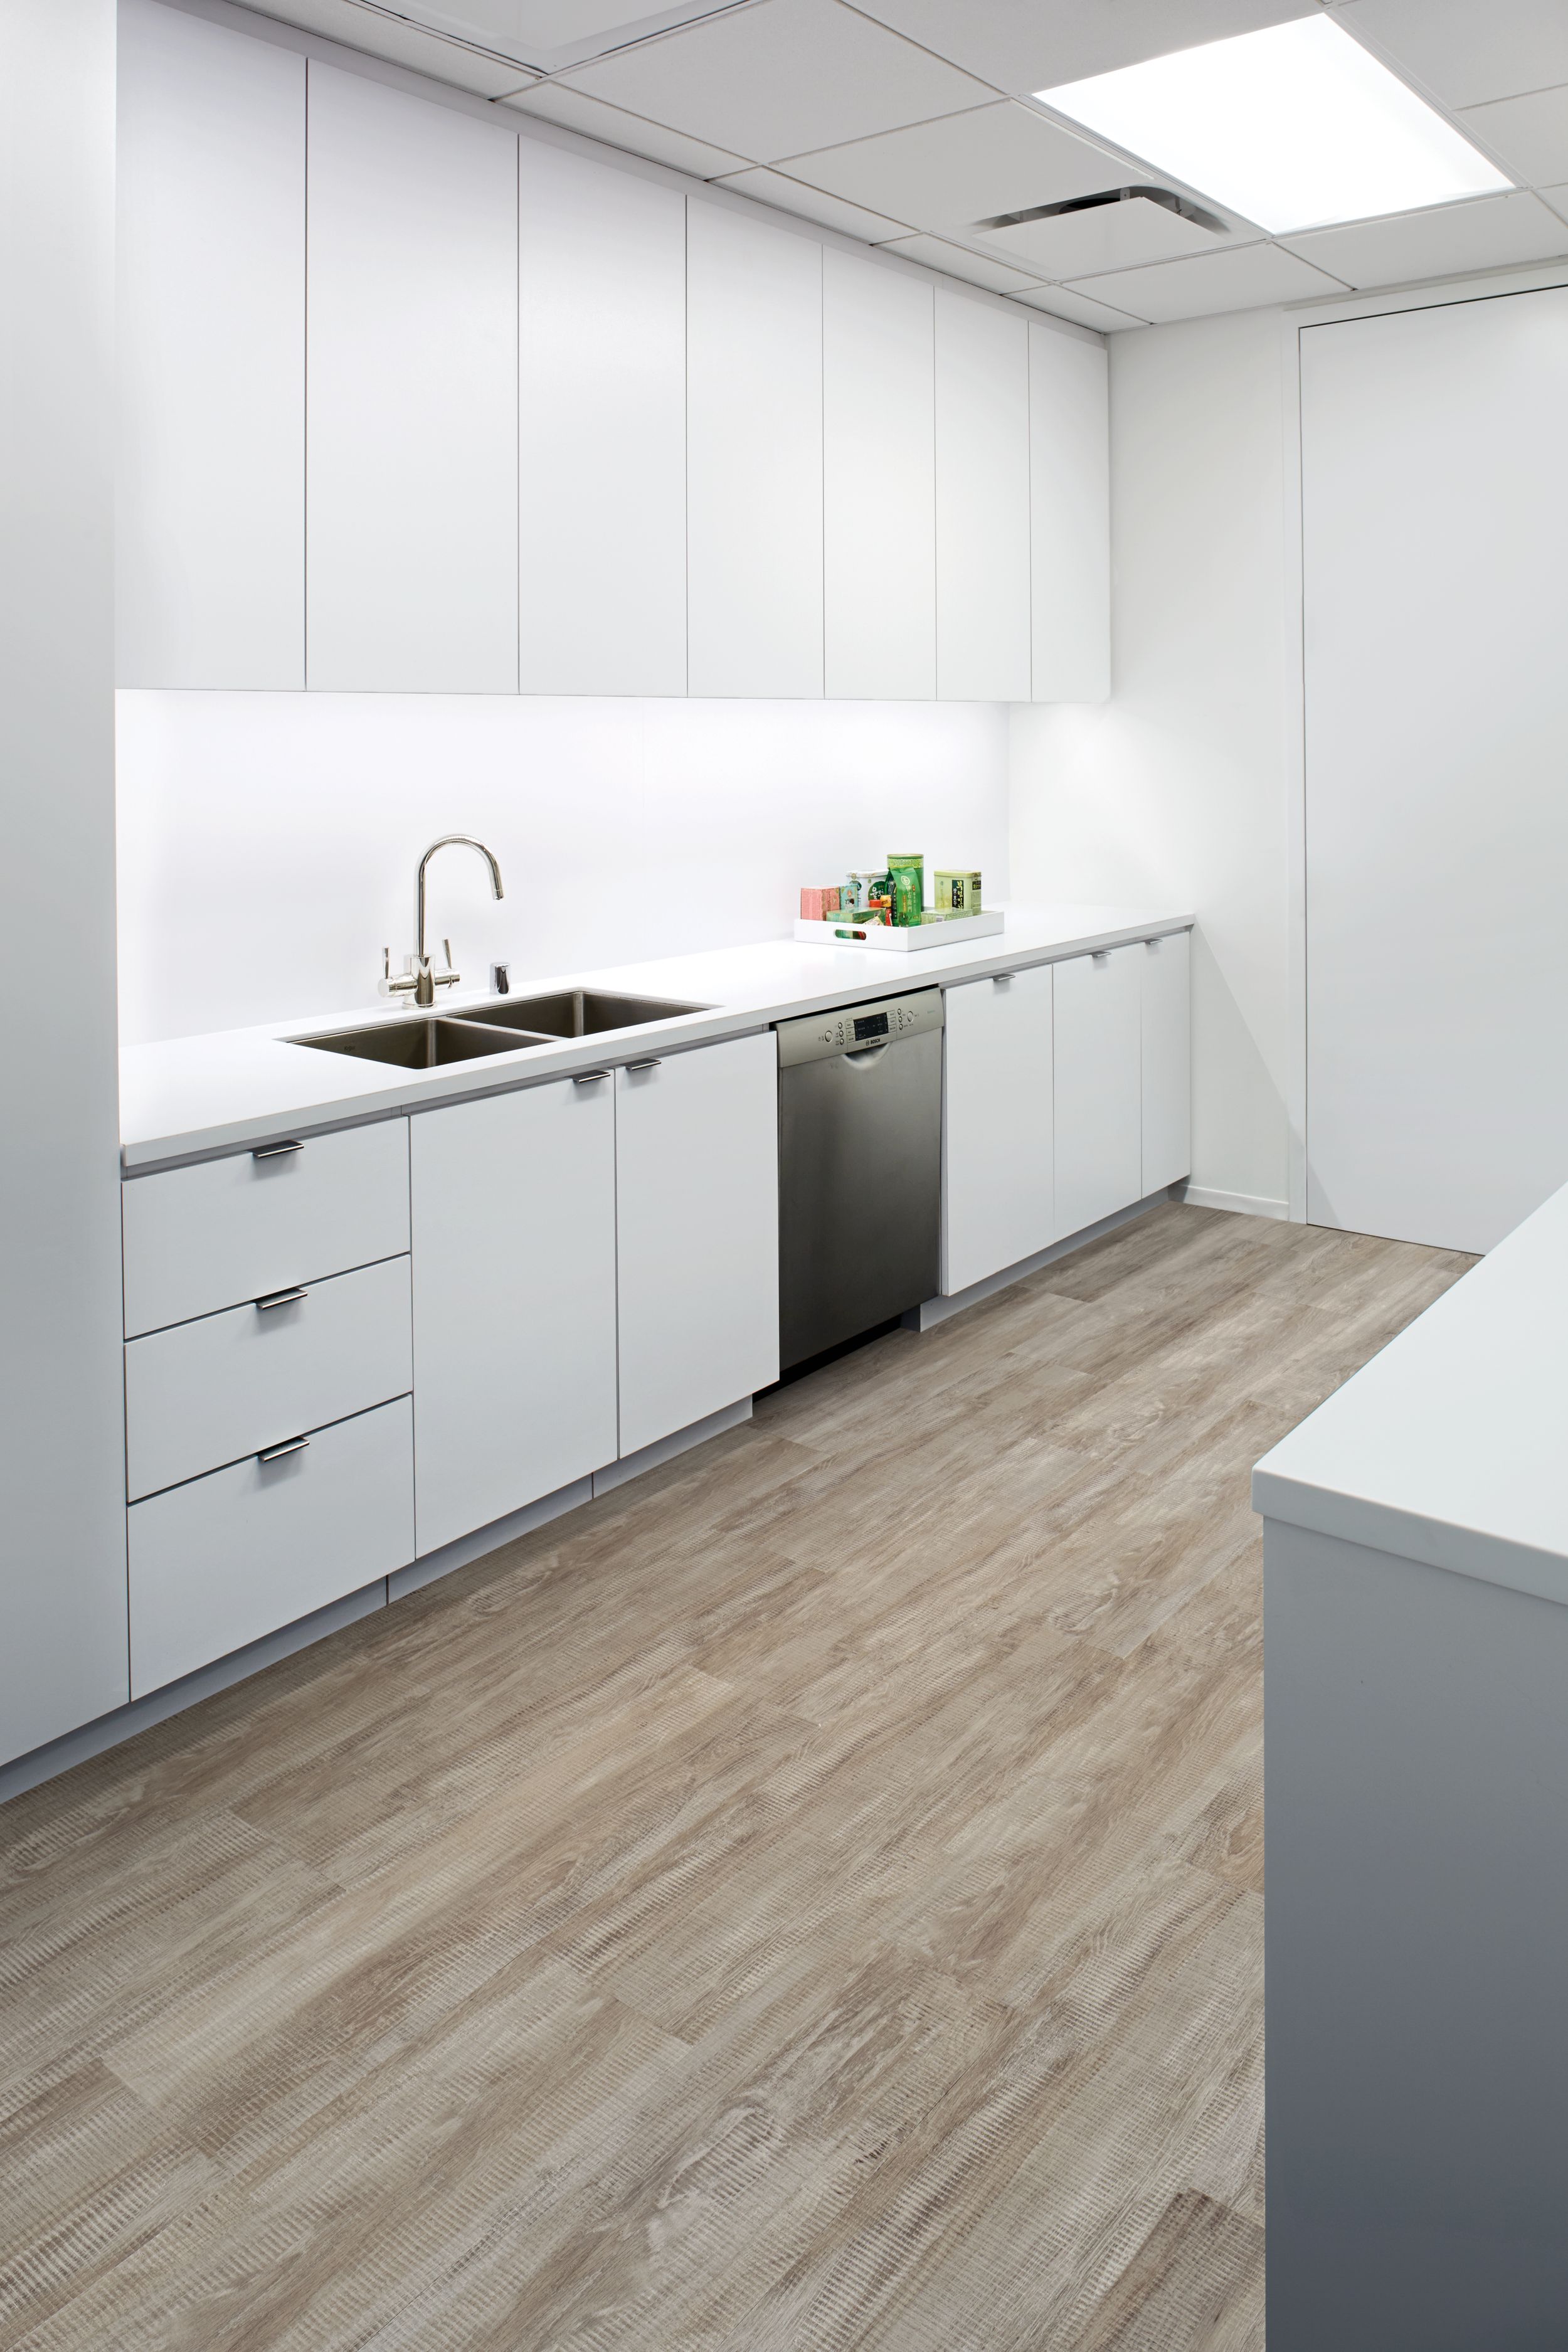 image Interface Textured Woodgrains LVT in kitchen area with sink numéro 9